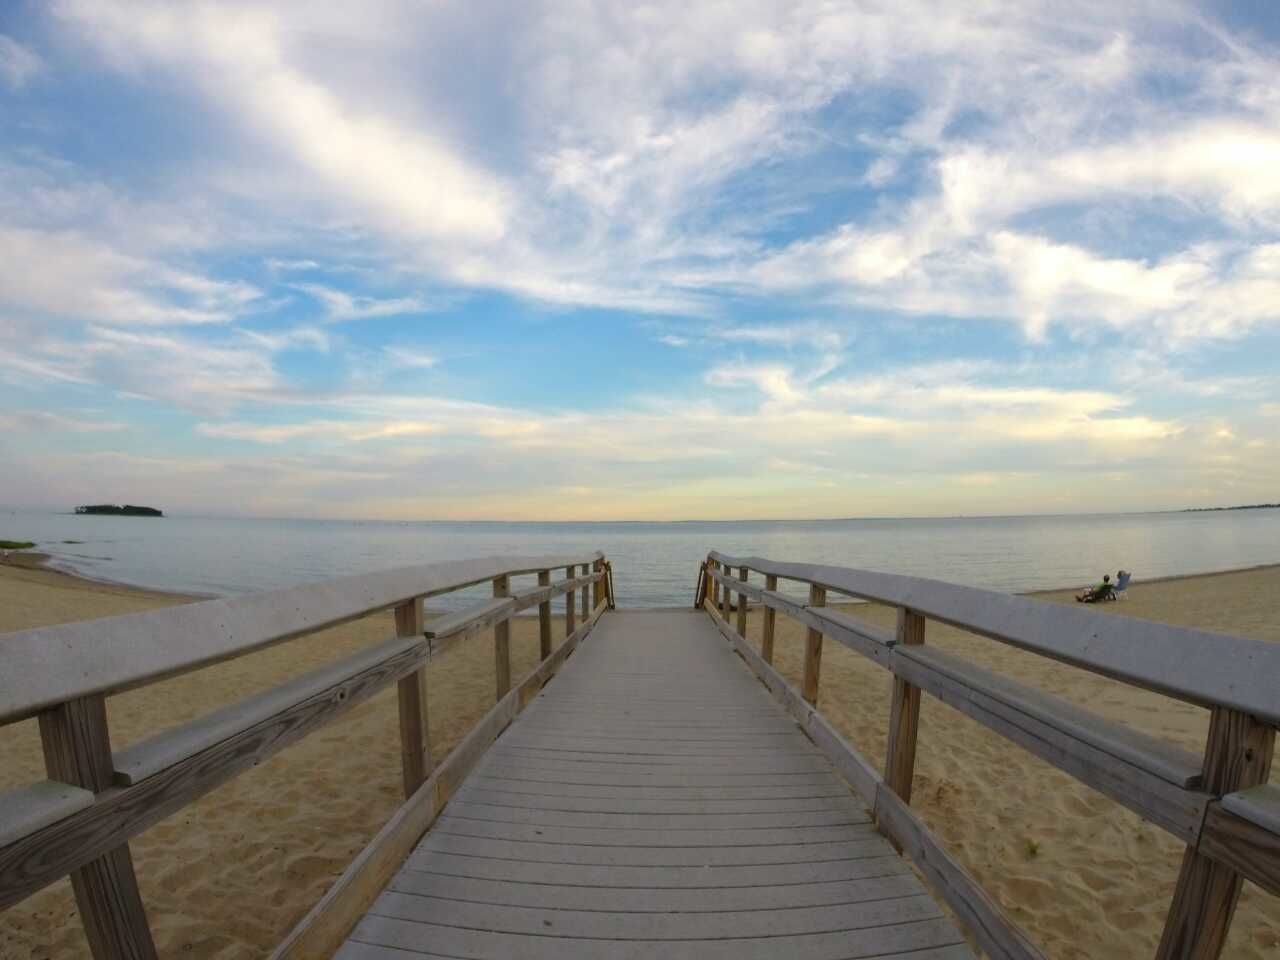 Empty boardwalk leading onto sandy beach